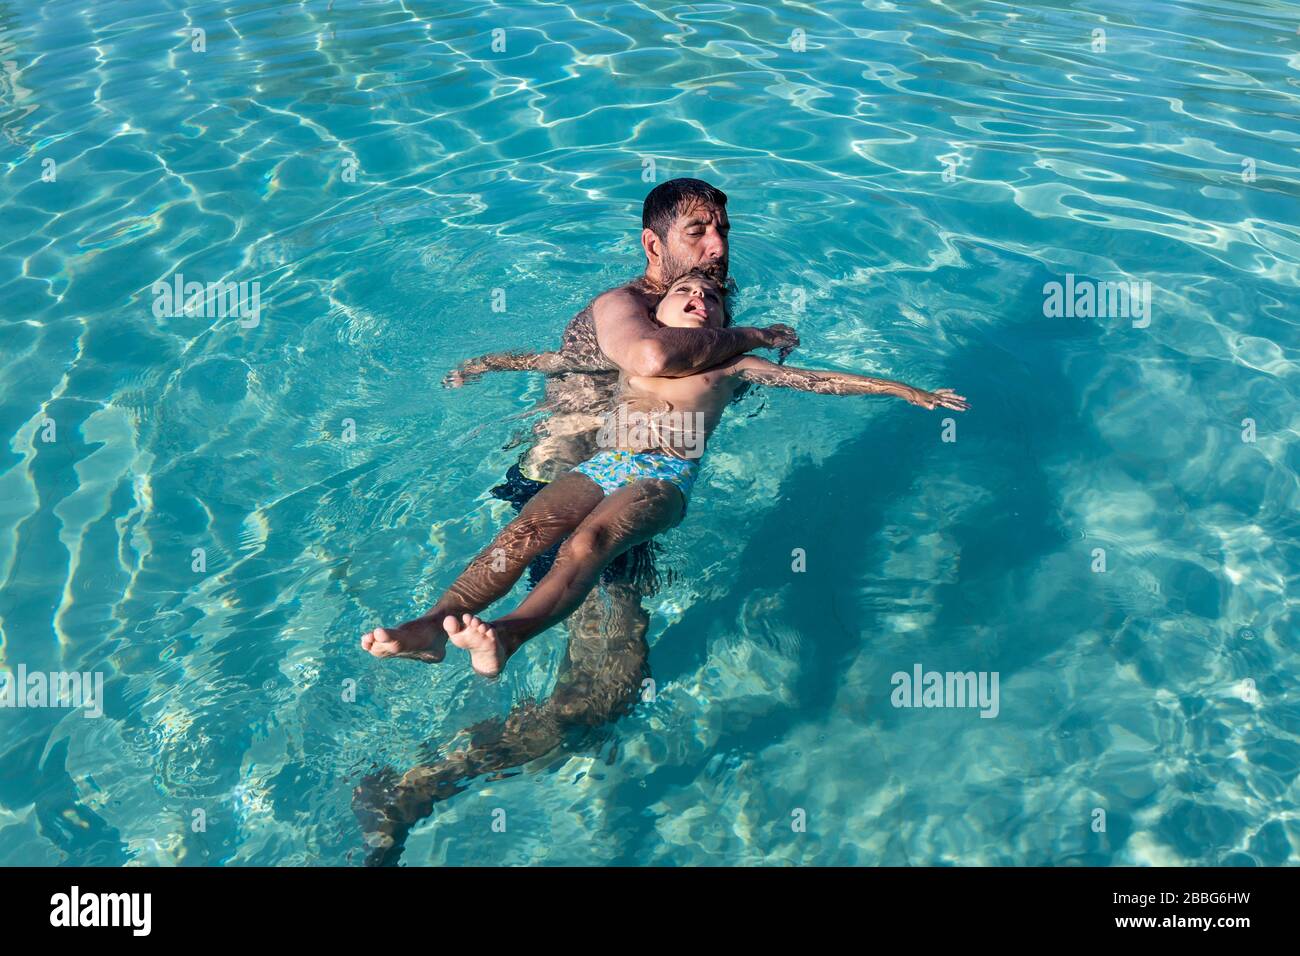 man-rescuing-boy-who-was-drowning-2BBG6HW.jpg